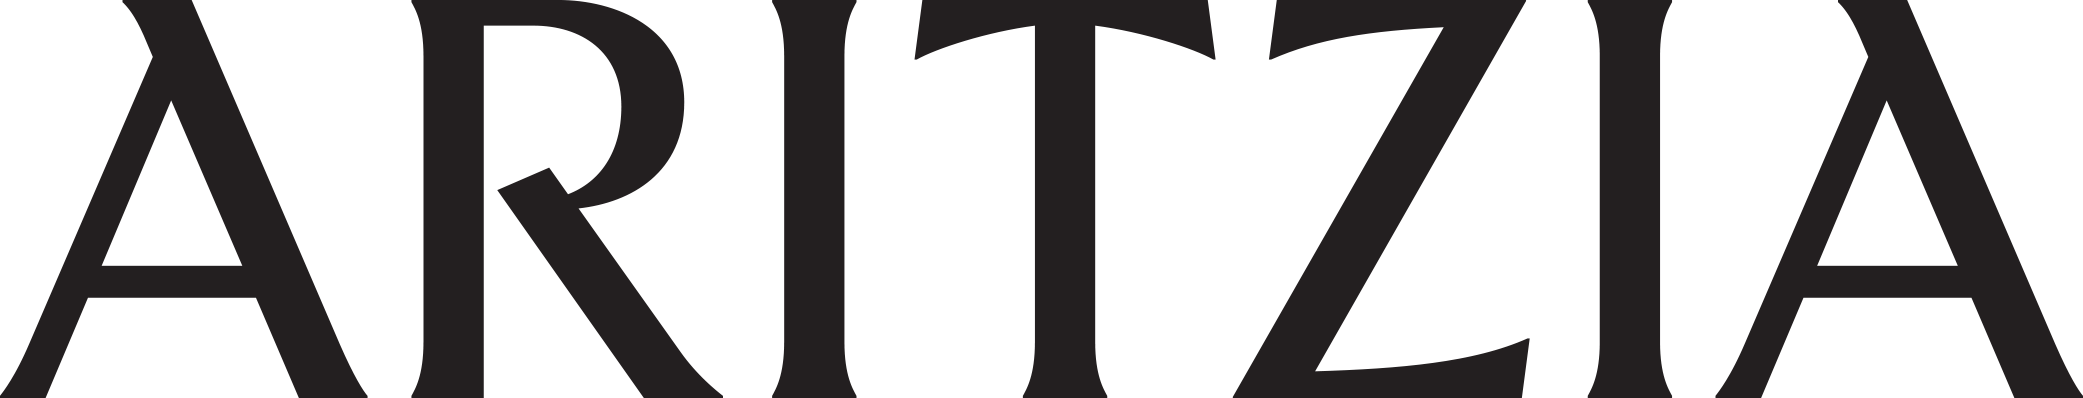 Aritzia Logo - Black - No Background - Copy